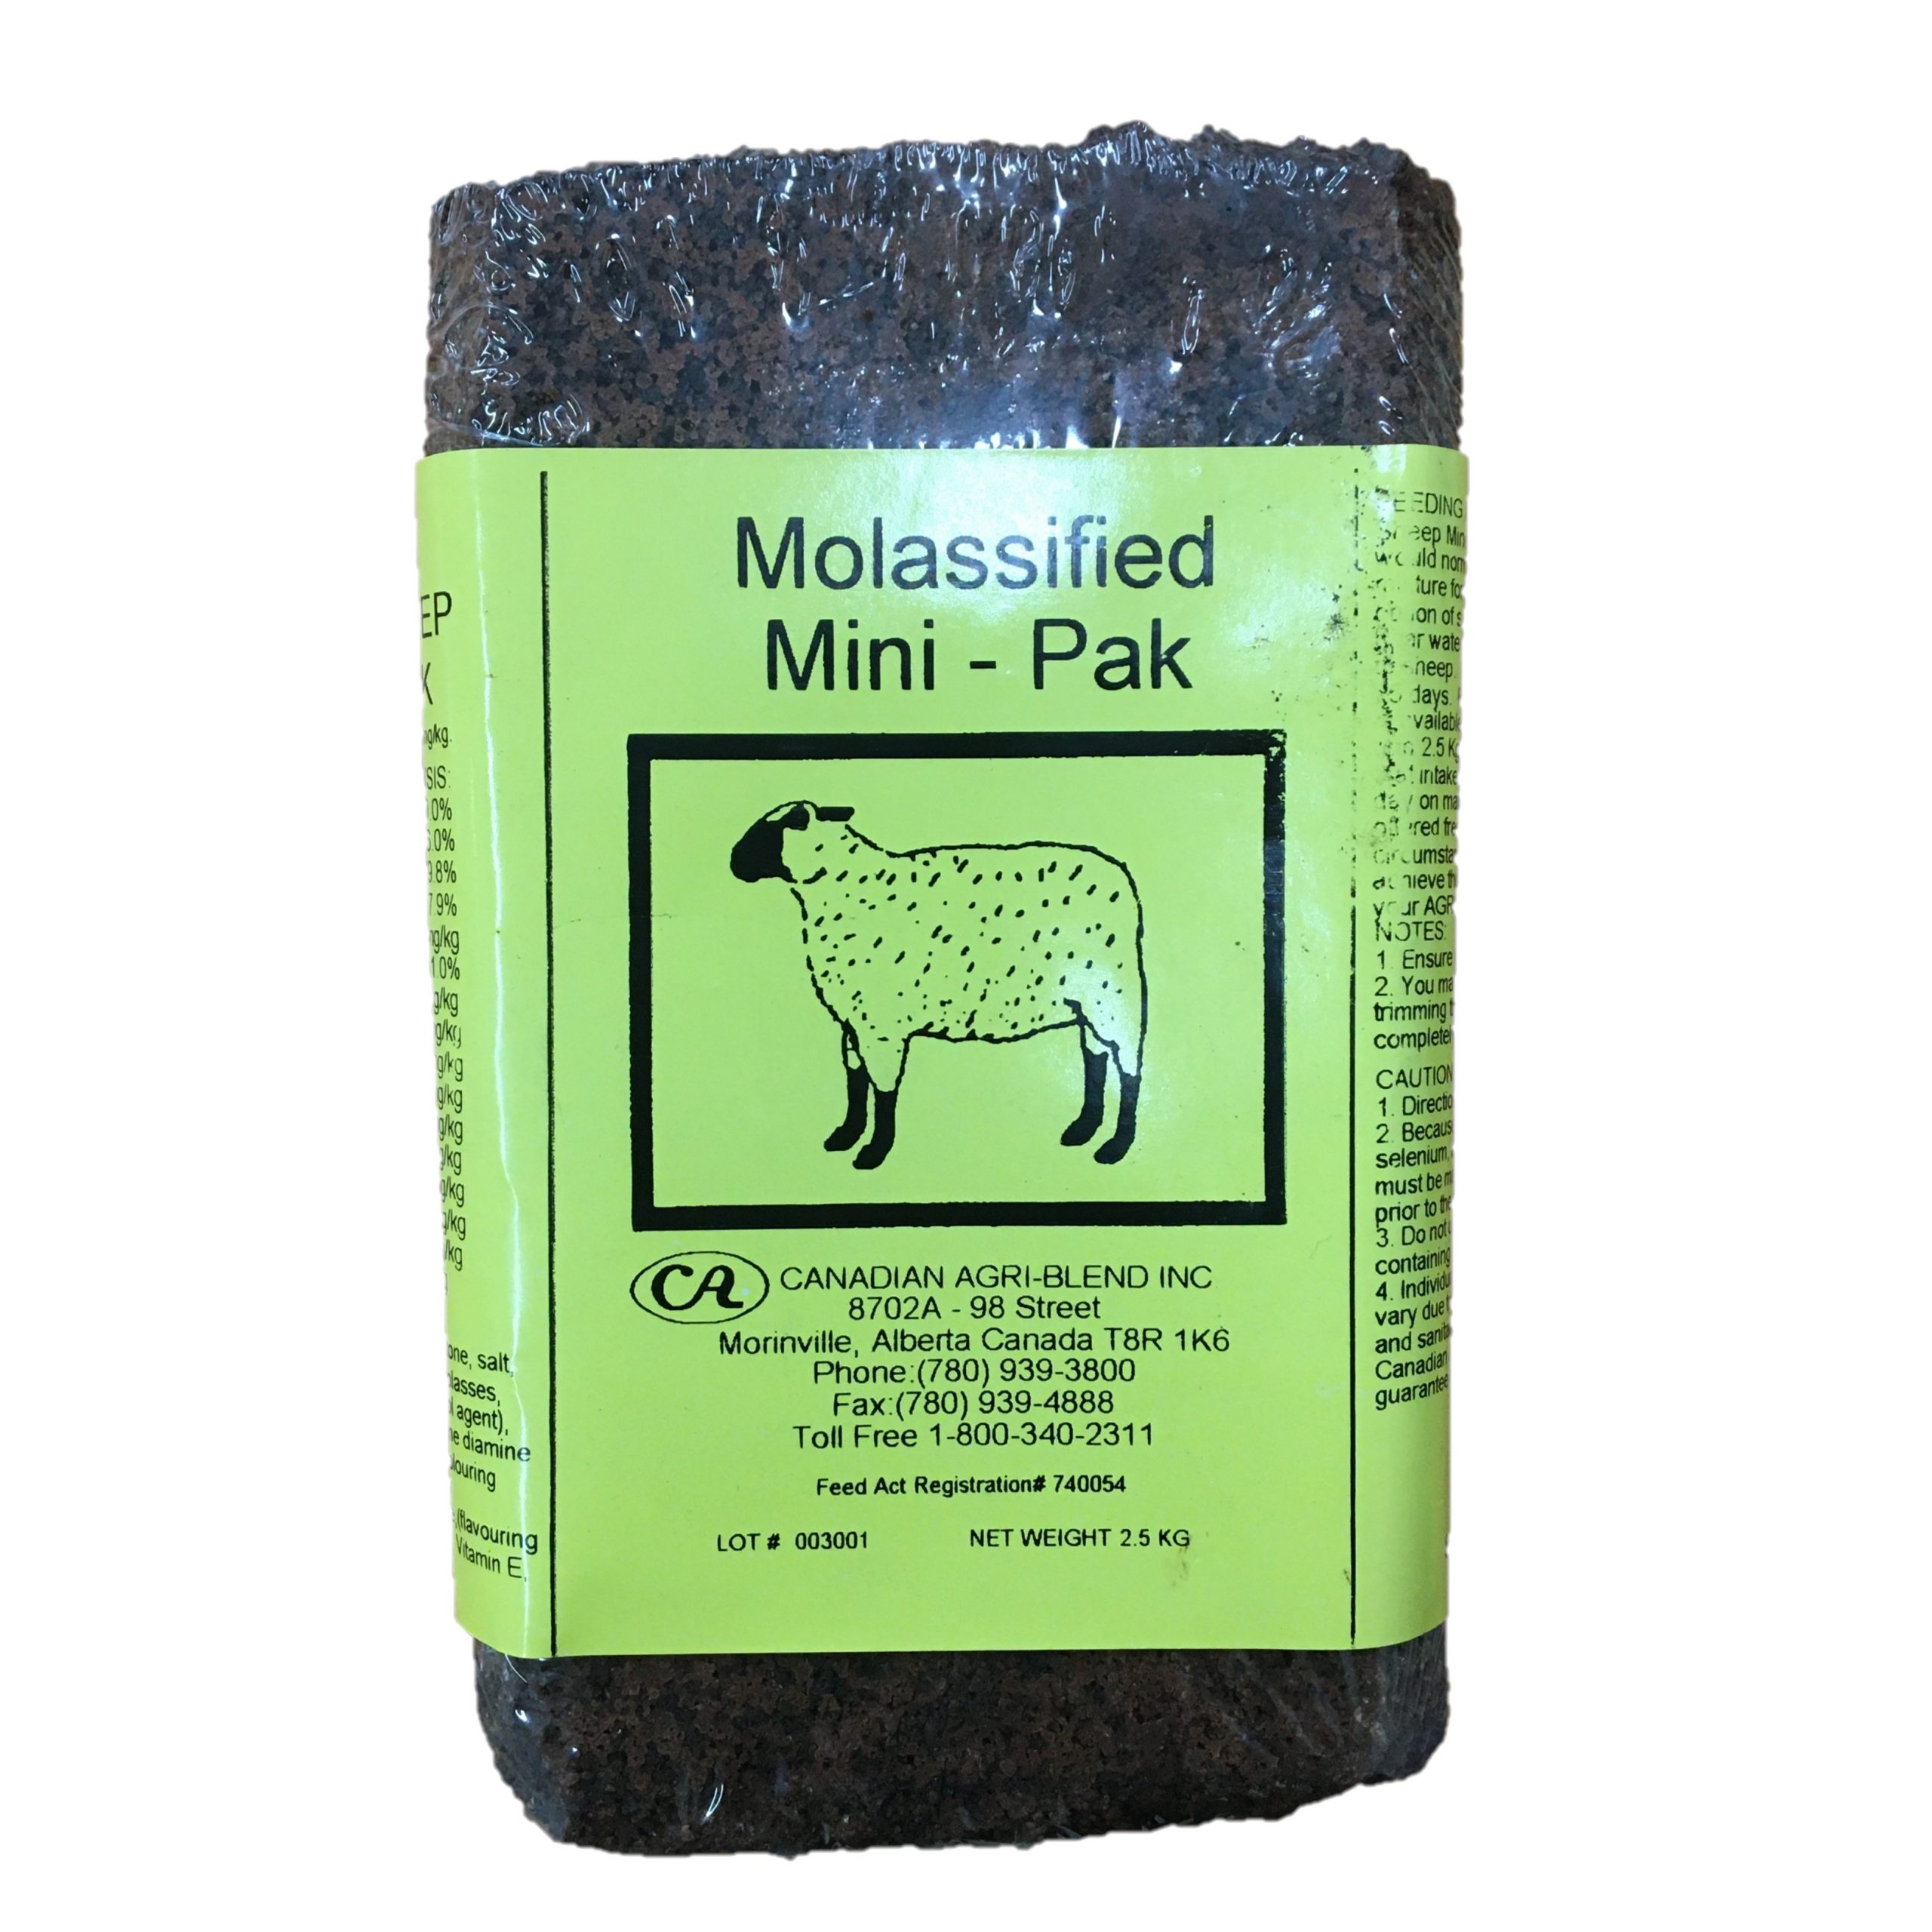 Molassified 10:6 Range Sheep Mineral Block – 2.5 kg